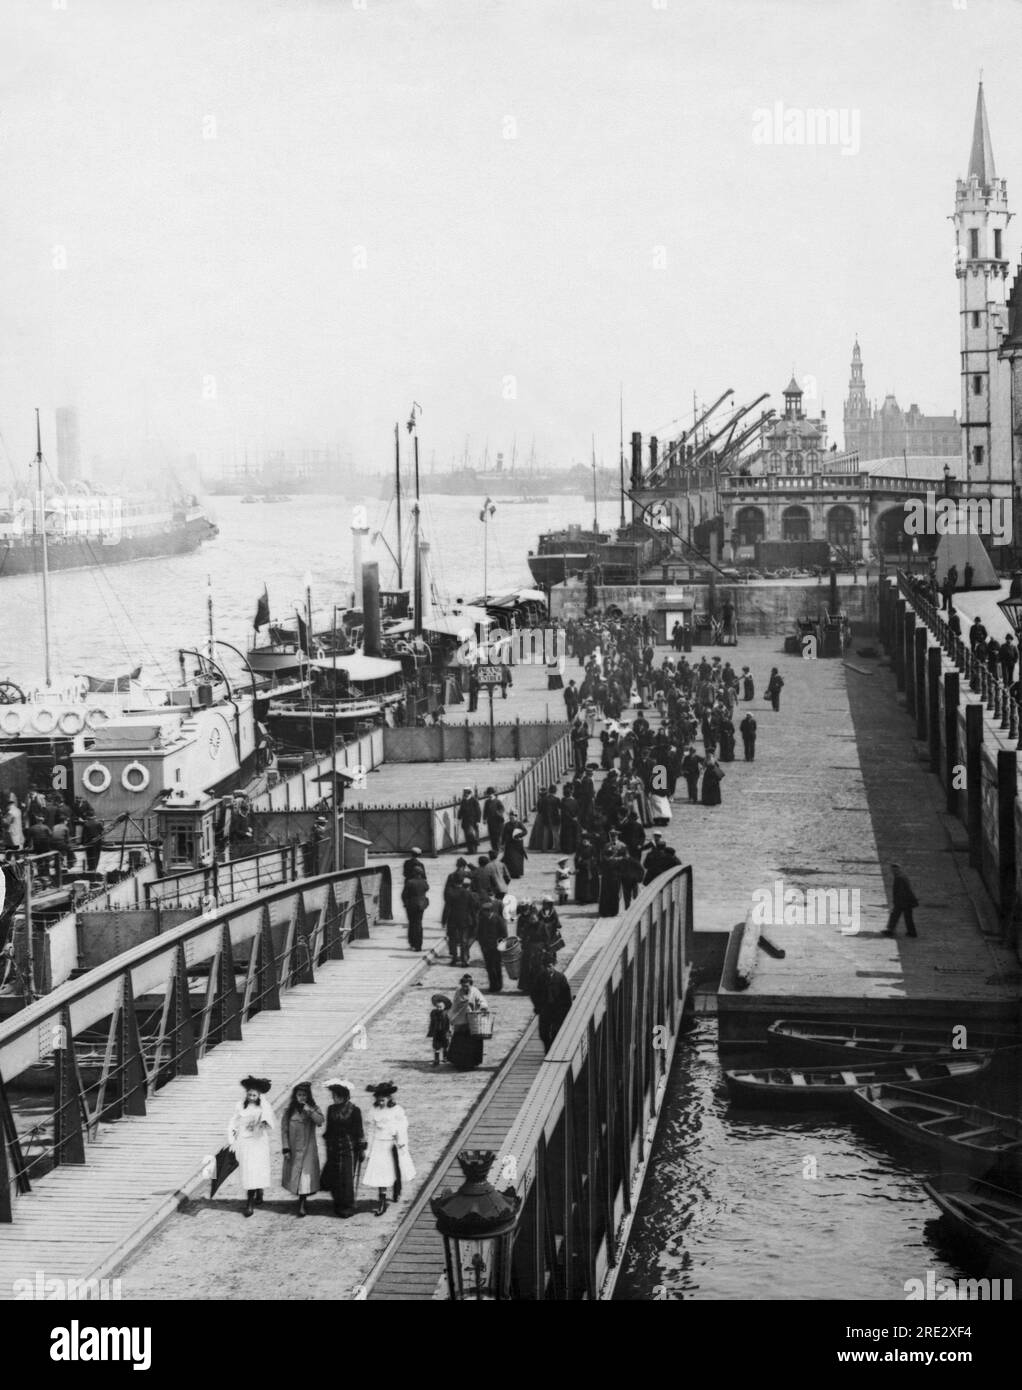 Antwerp, Belgium: c. 1900 The docks and promenade along the River ...